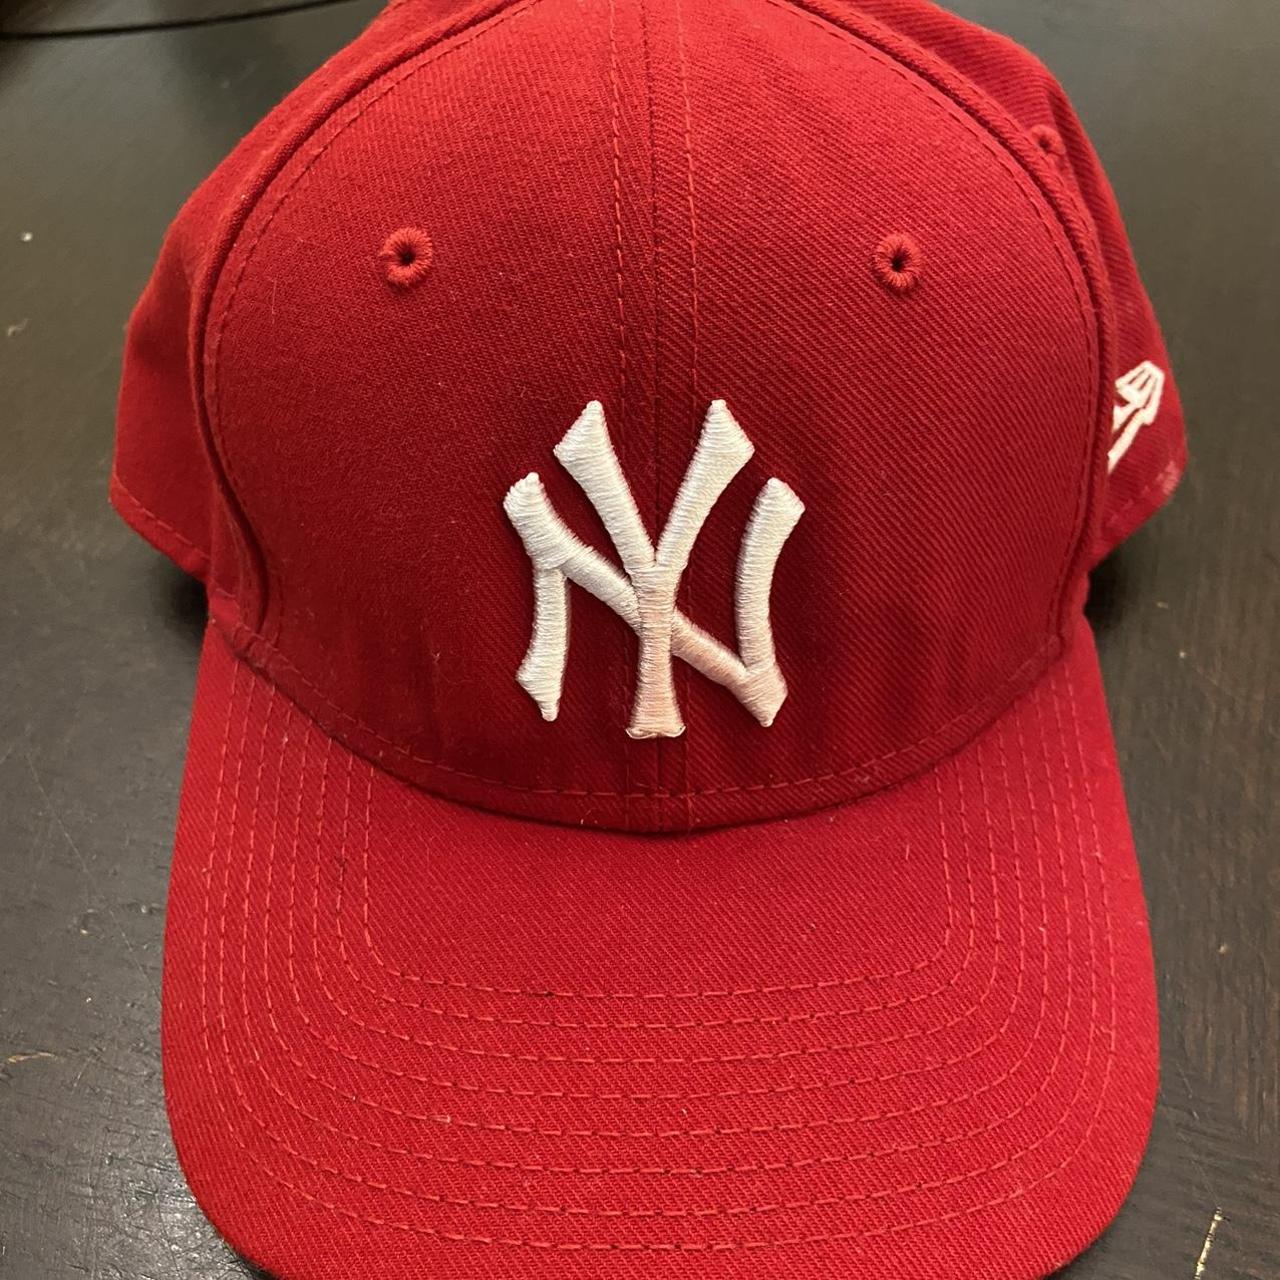 New Era New York Yankees Vintage Brown and Tan - Depop